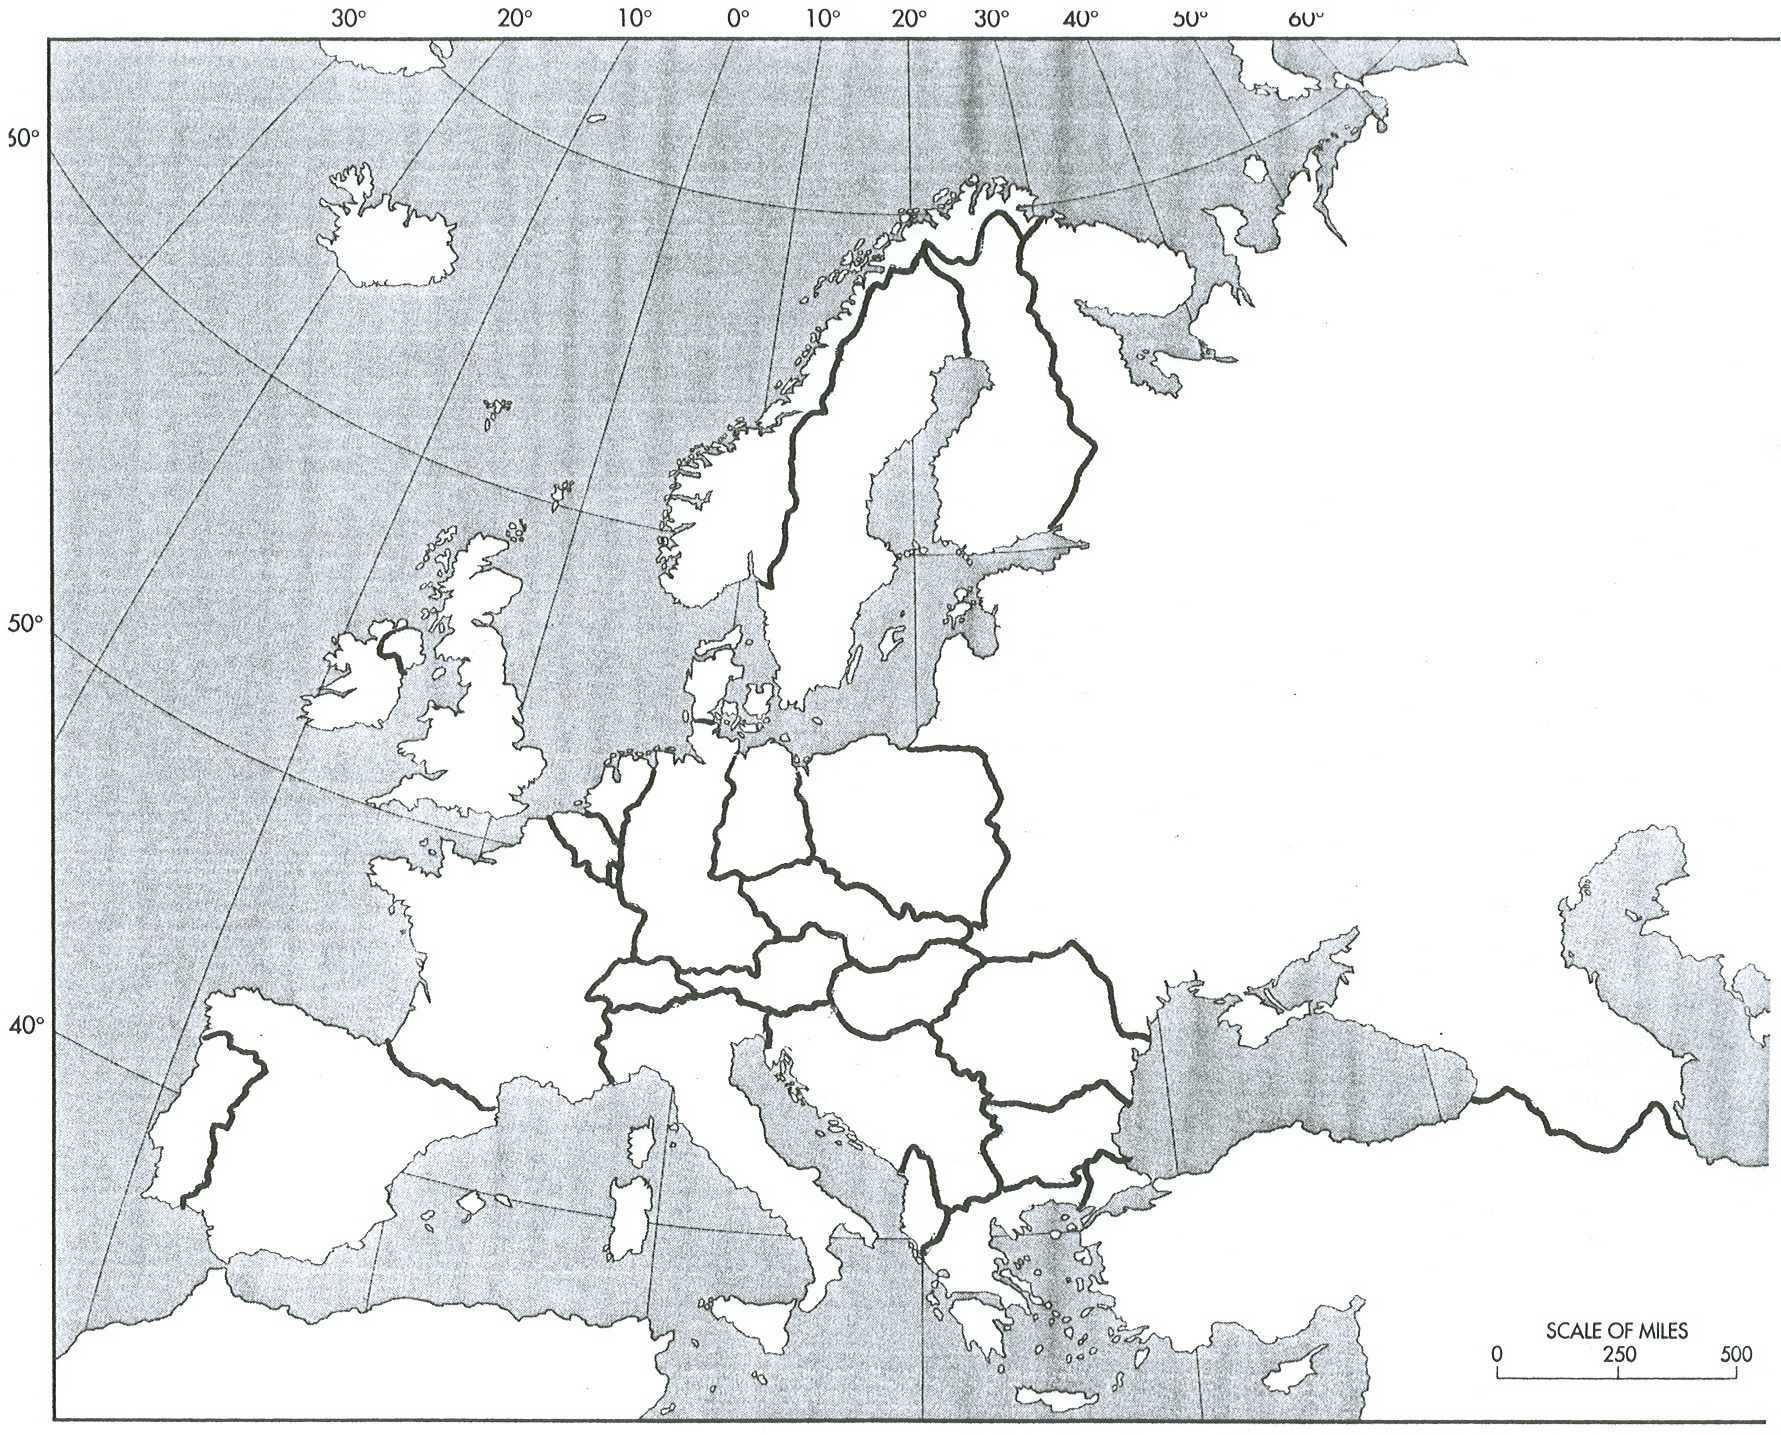 Europe after World War 1 Map Worksheet Answers or World War Ii Blank Map Of Europe Copy World War 2 Map Europe